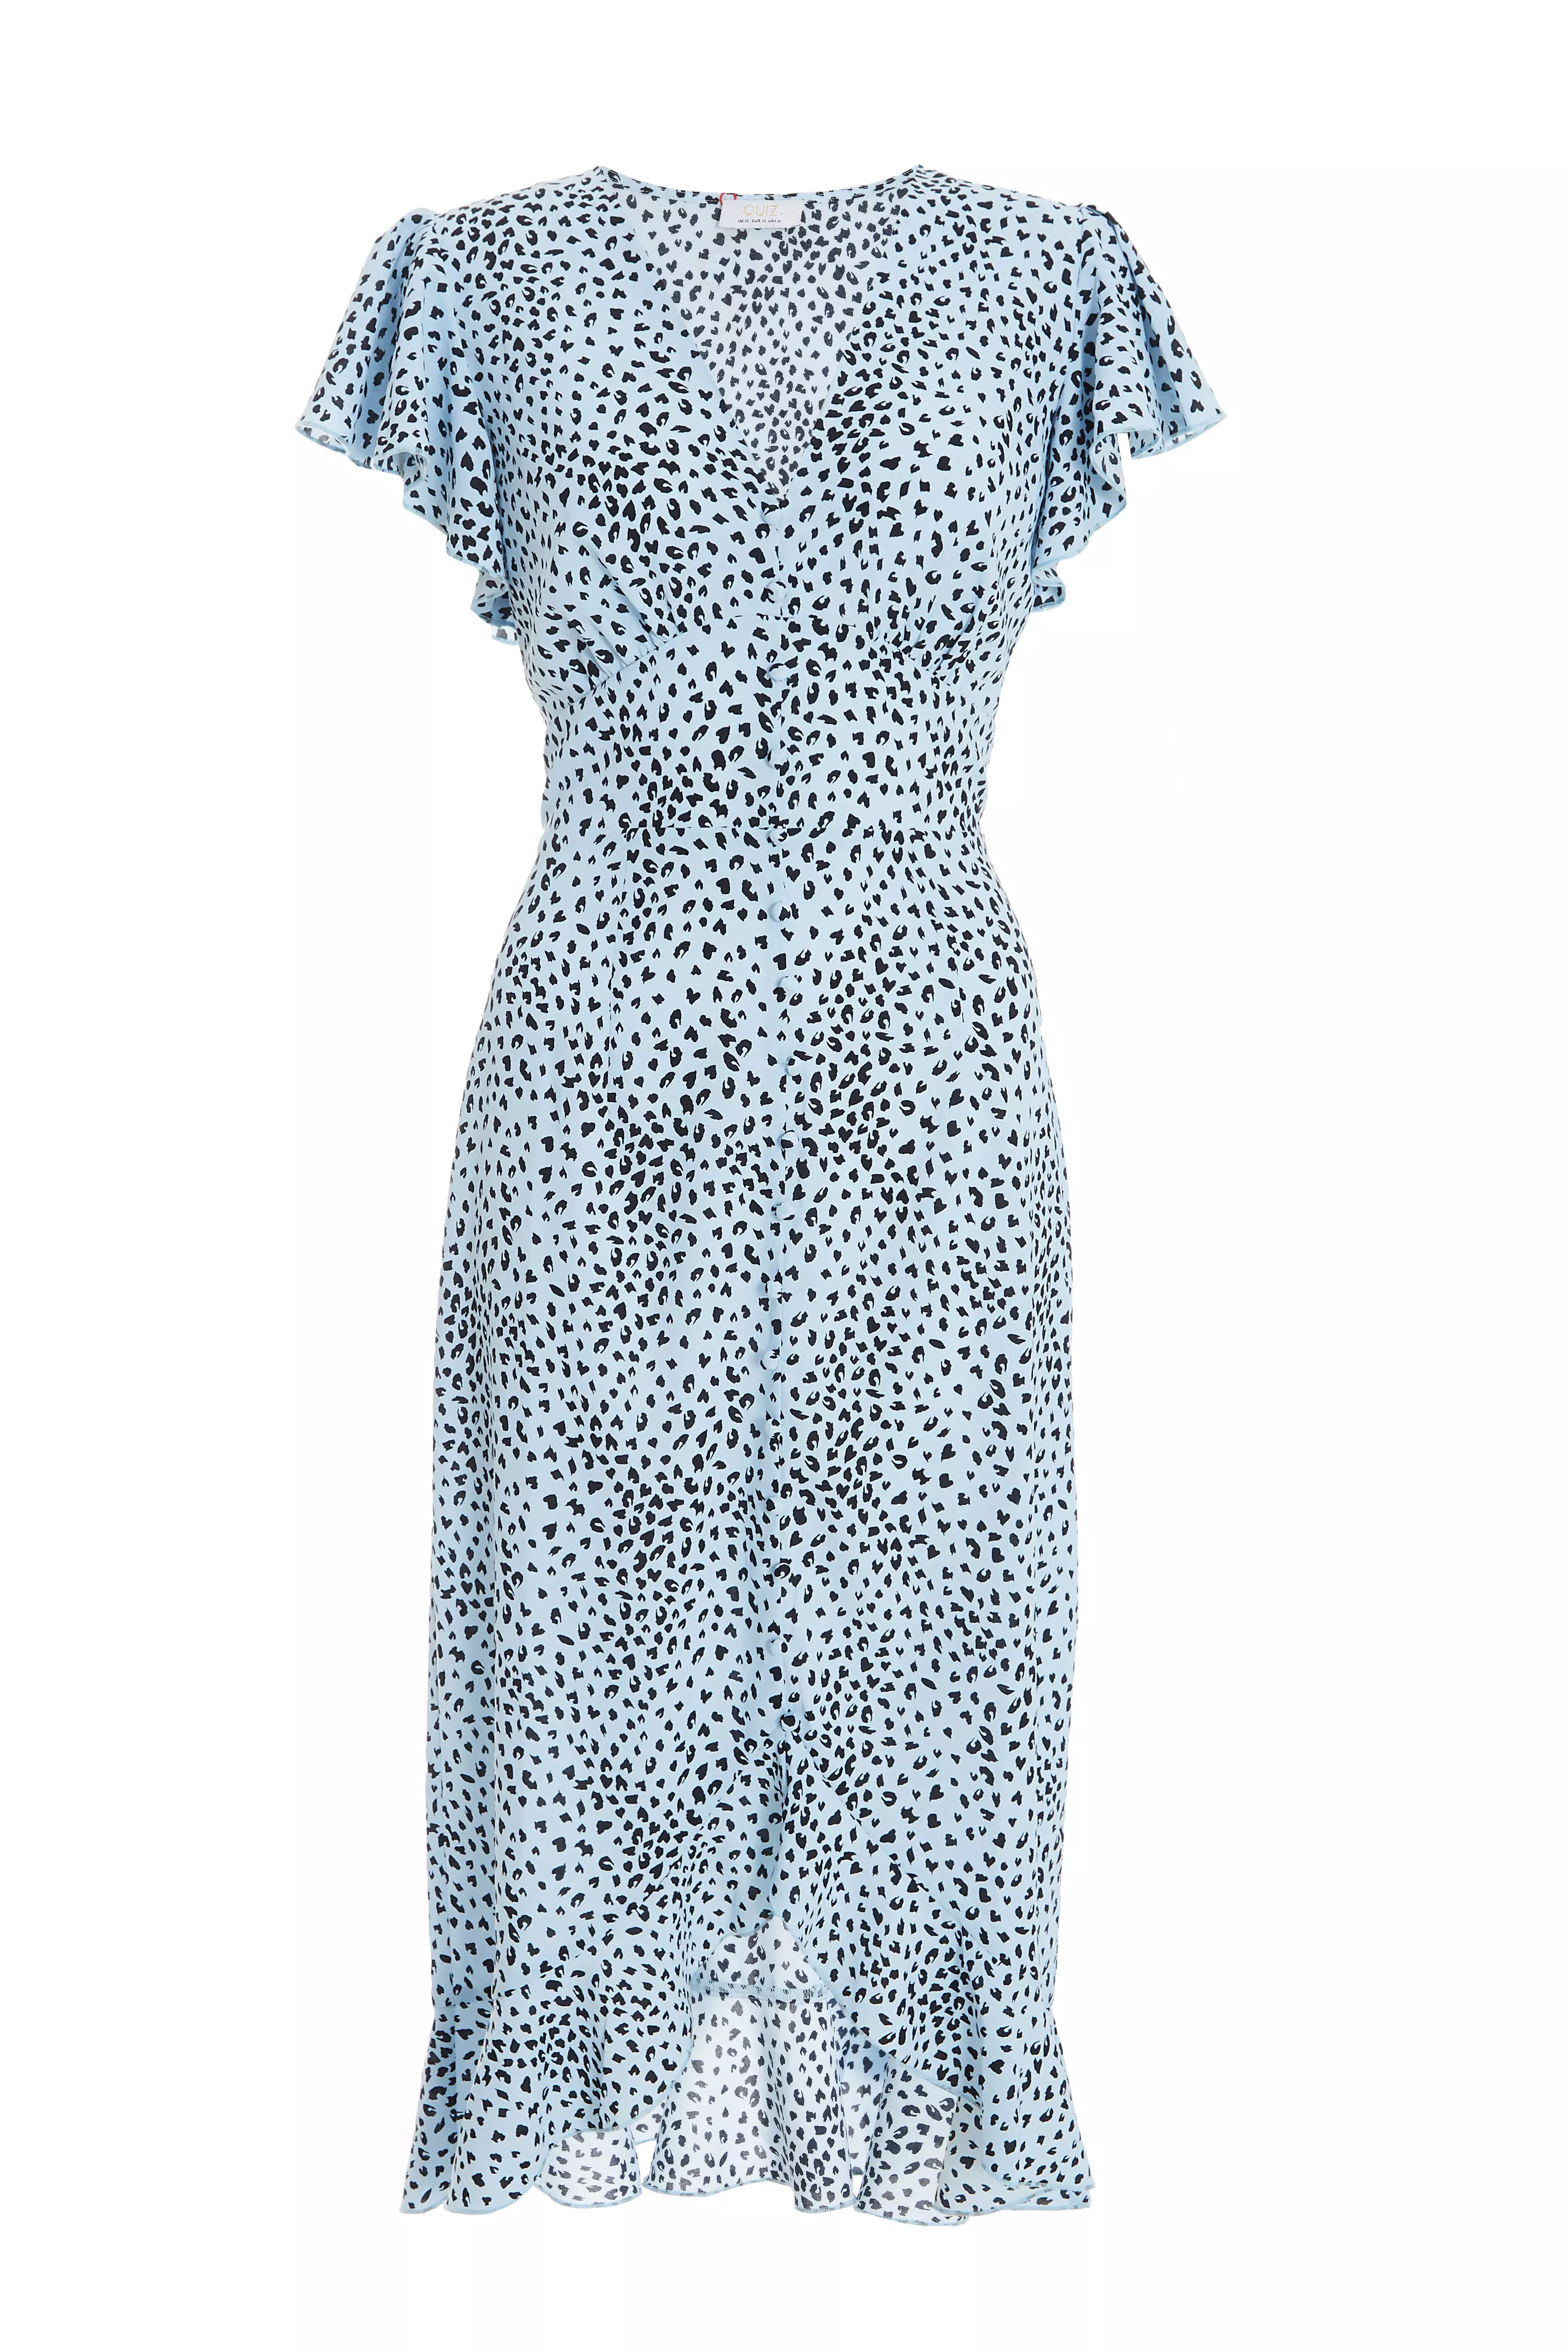 Blue Animal Print Frill Sleeve Midi Dress